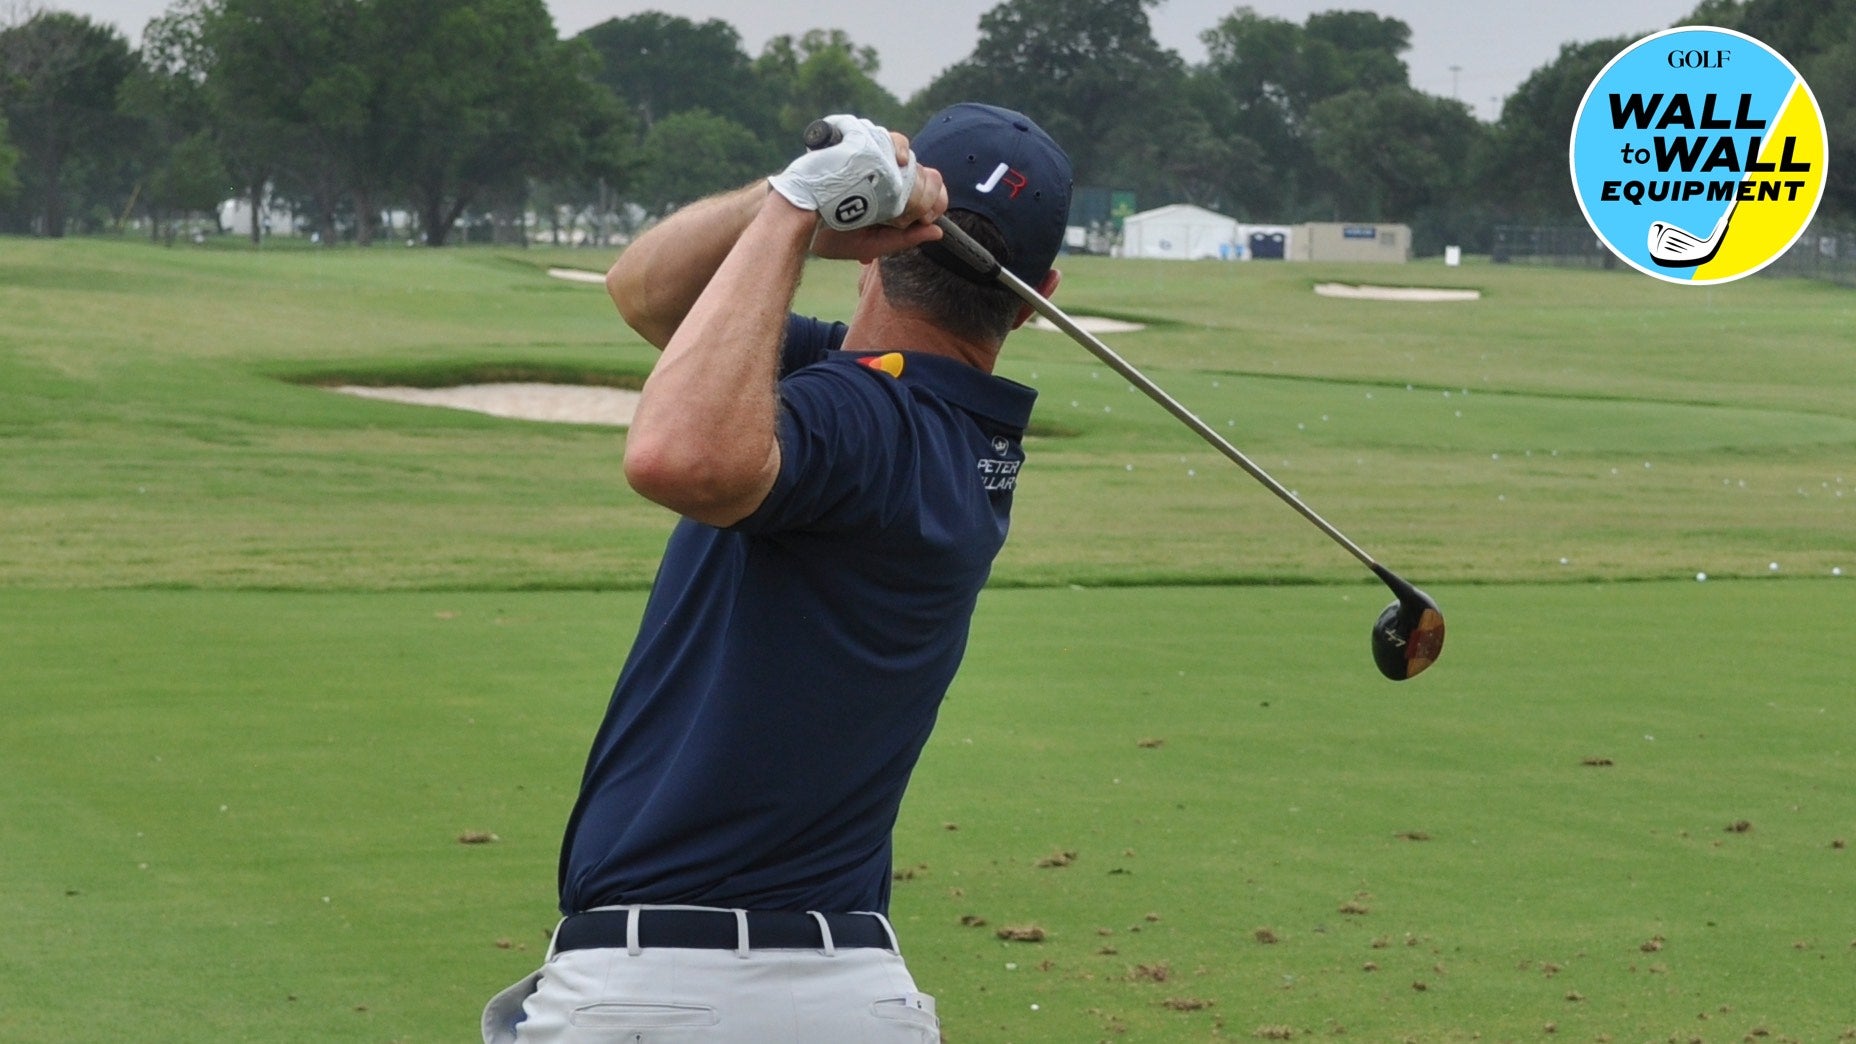 Pro golfer justin rose hits persimmon driver at PGA Tour event.